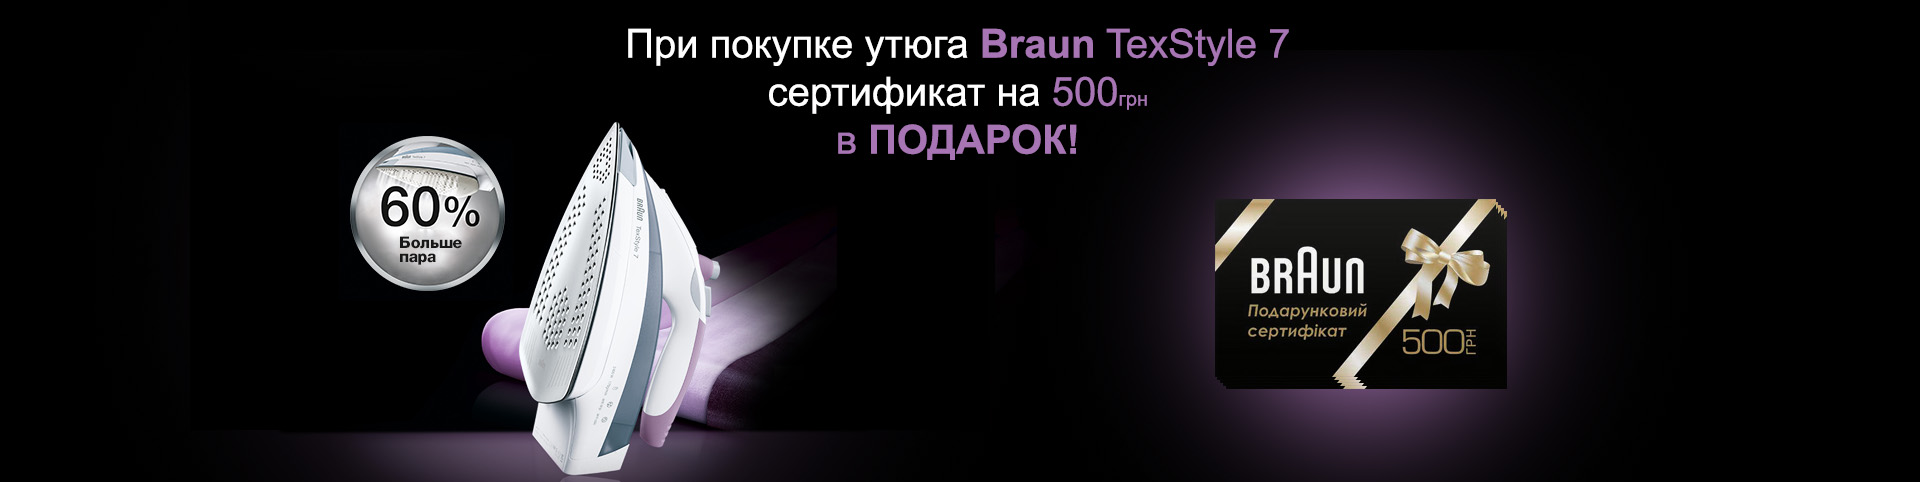 К утюгам TexStyle 7 сертификат Braun на 500 грн в подарок!